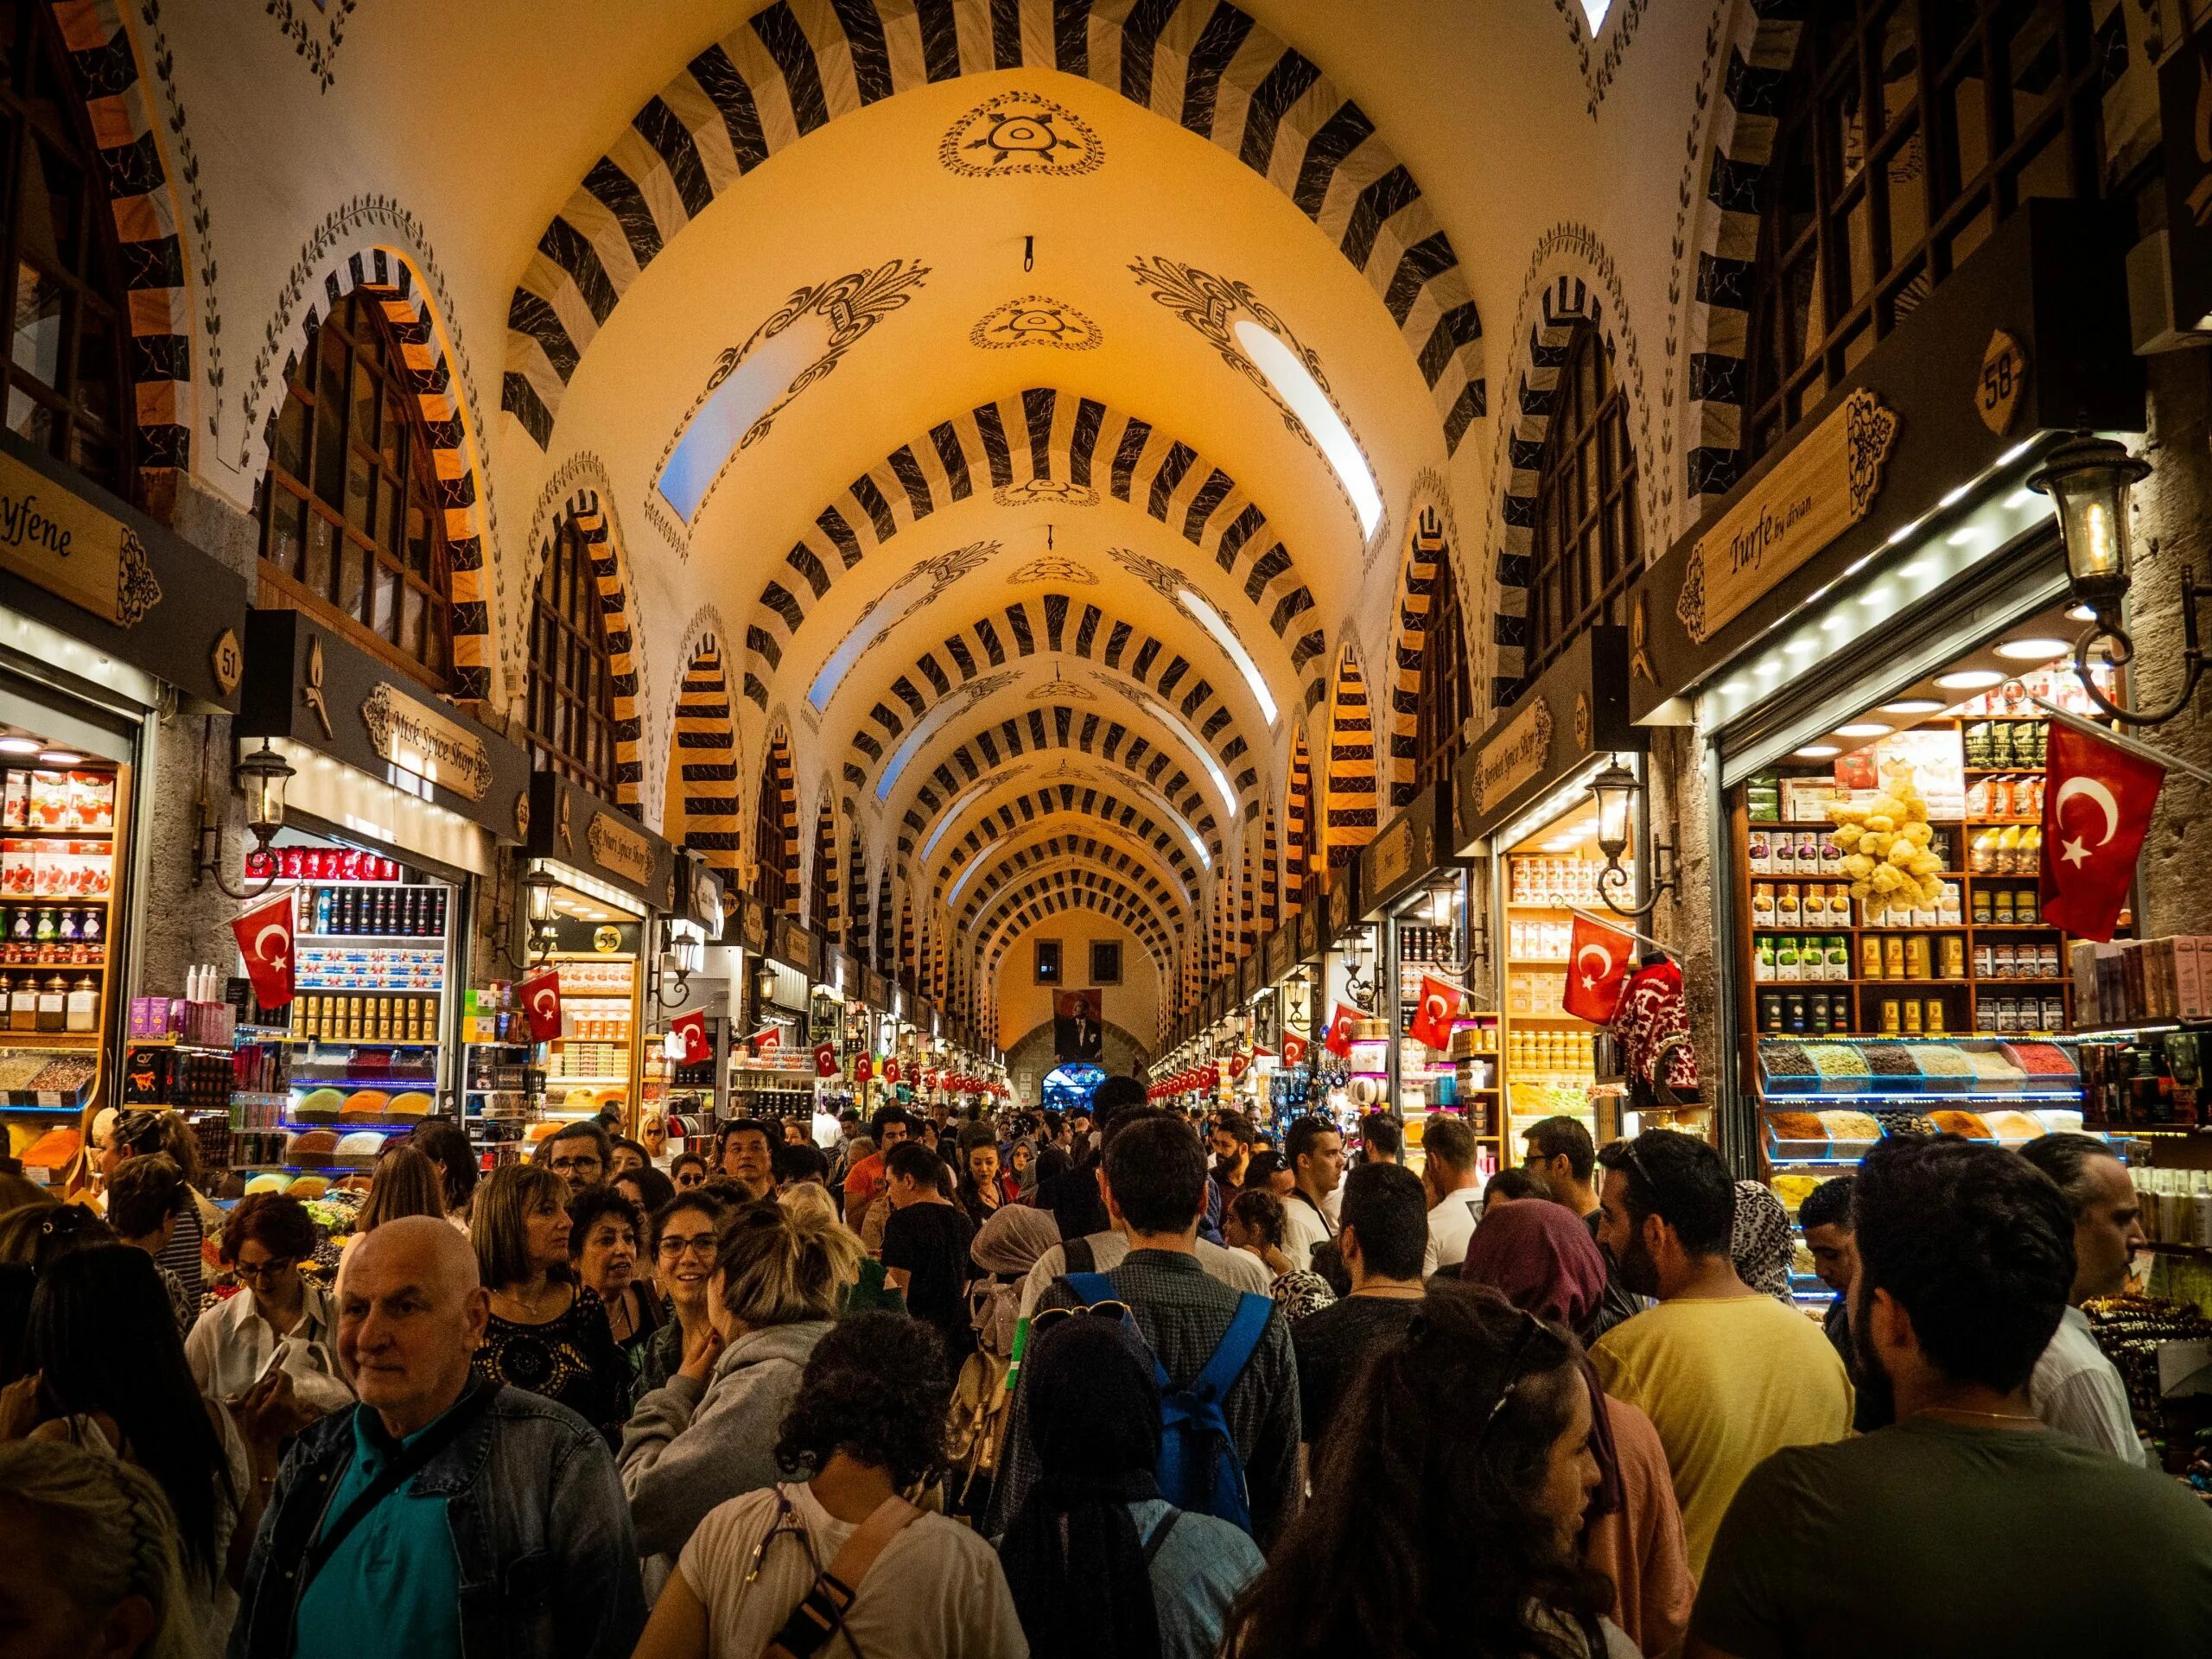 Turkey shop. Grand Bazaar Стамбул. Рынок в Стамбуле Гранд базар. Гранд-базар kapali Çarşi. Капалы Чарши в Стамбуле.